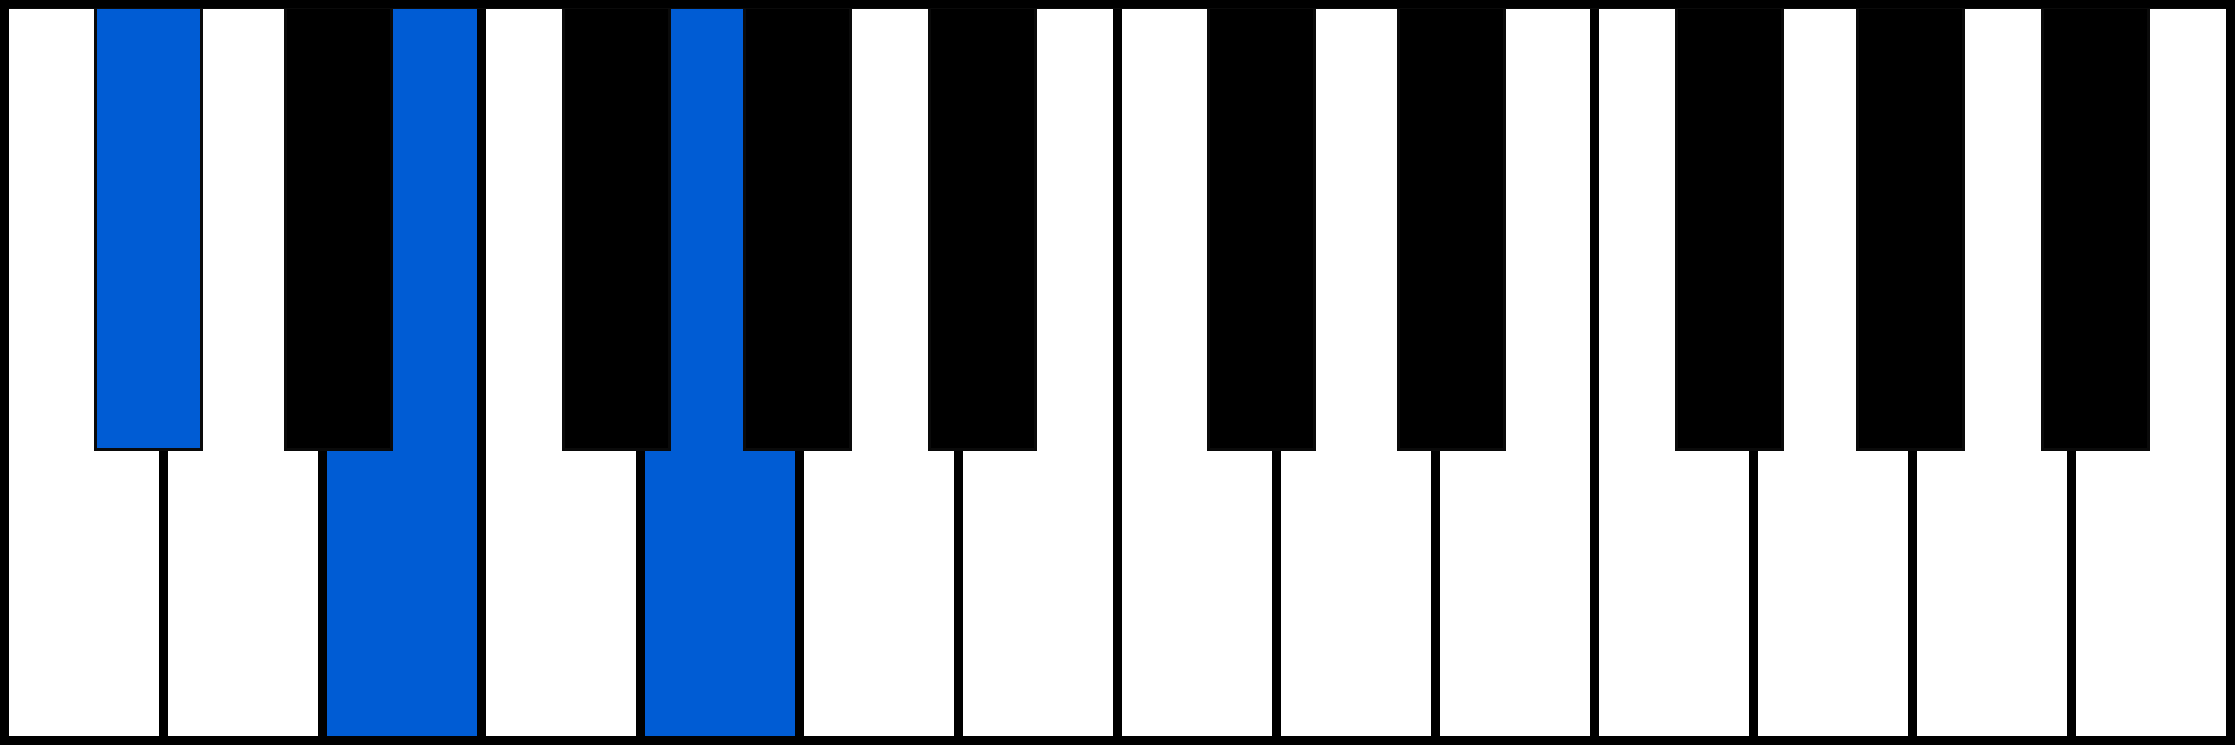 C#dim piano chord fingering